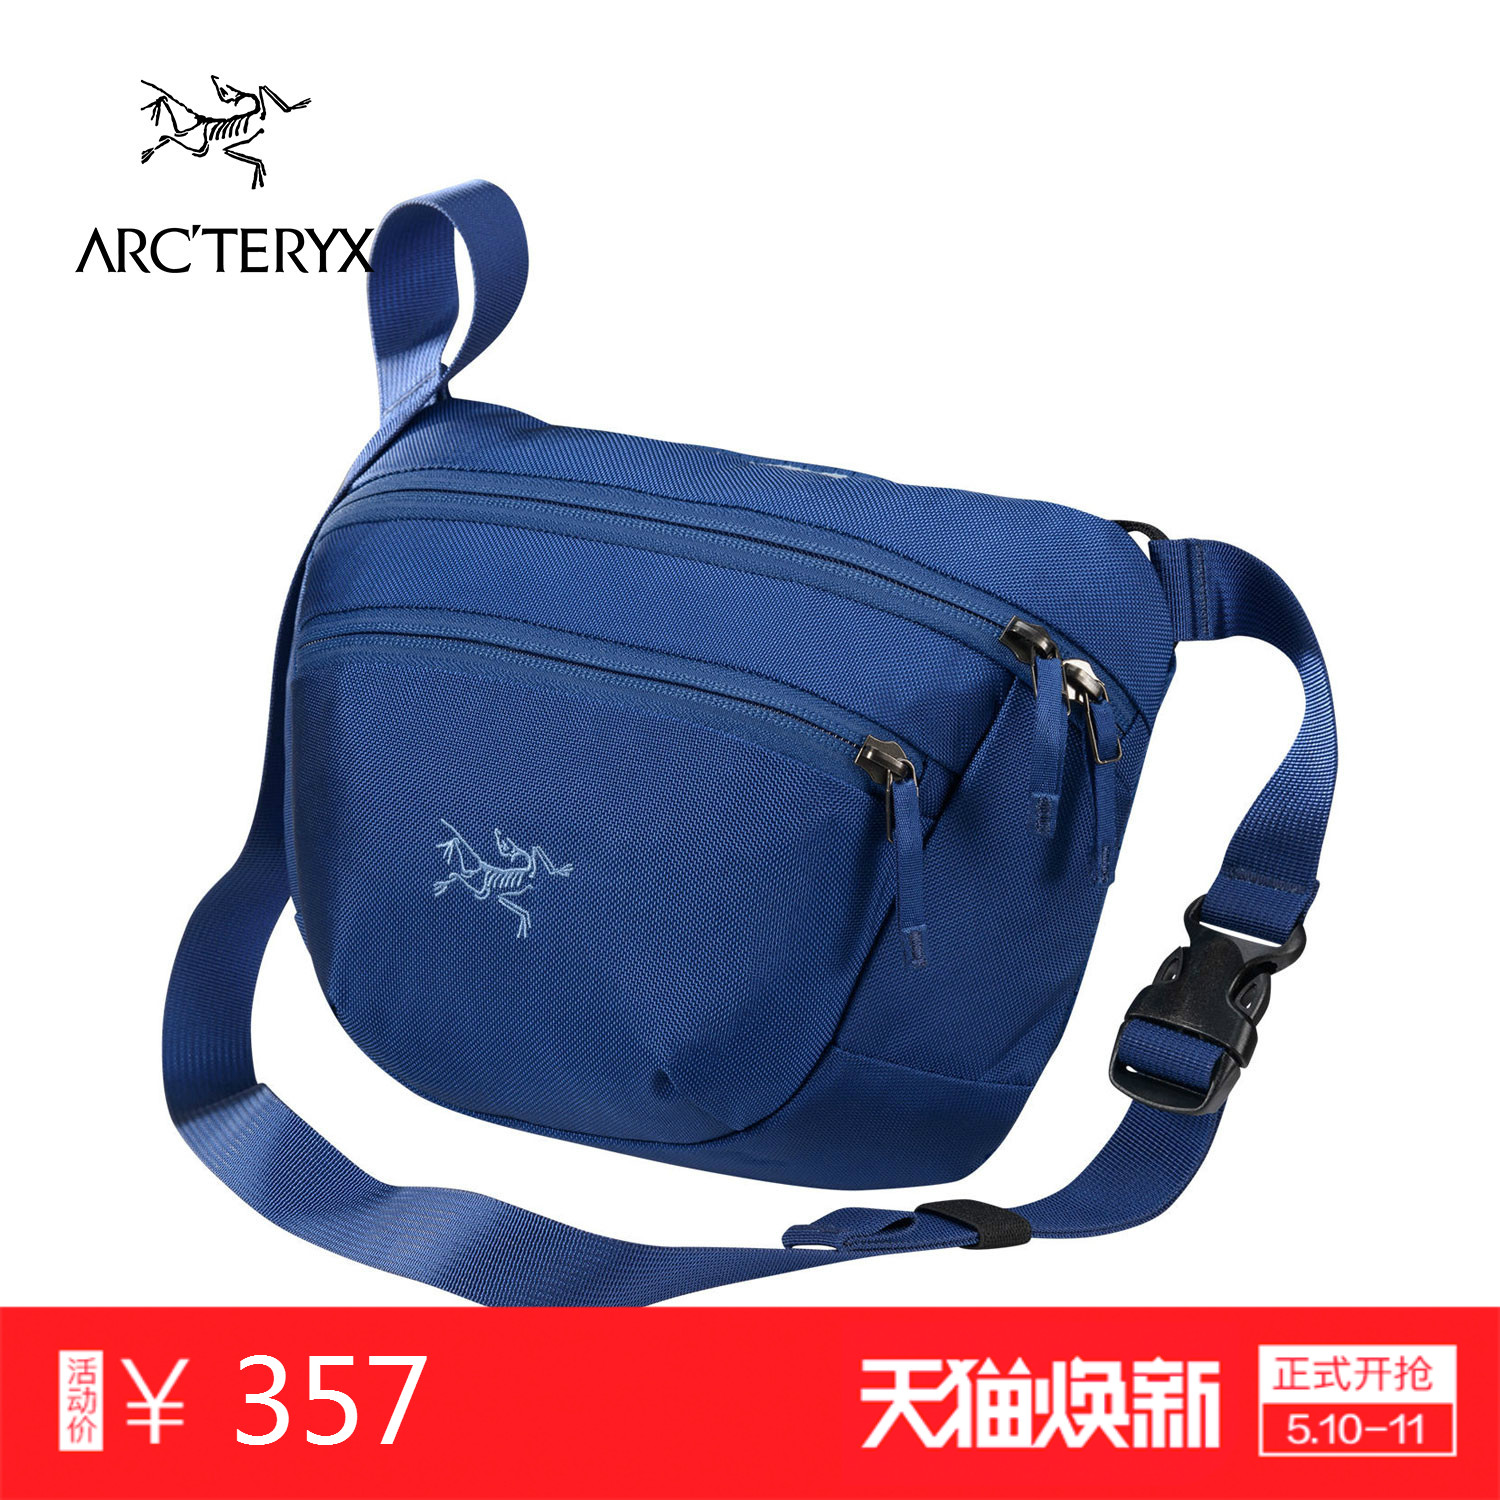 Arcteryx/Archaeopteryx outdoor small daily multifunctional waistbag Maka2 17172/7364